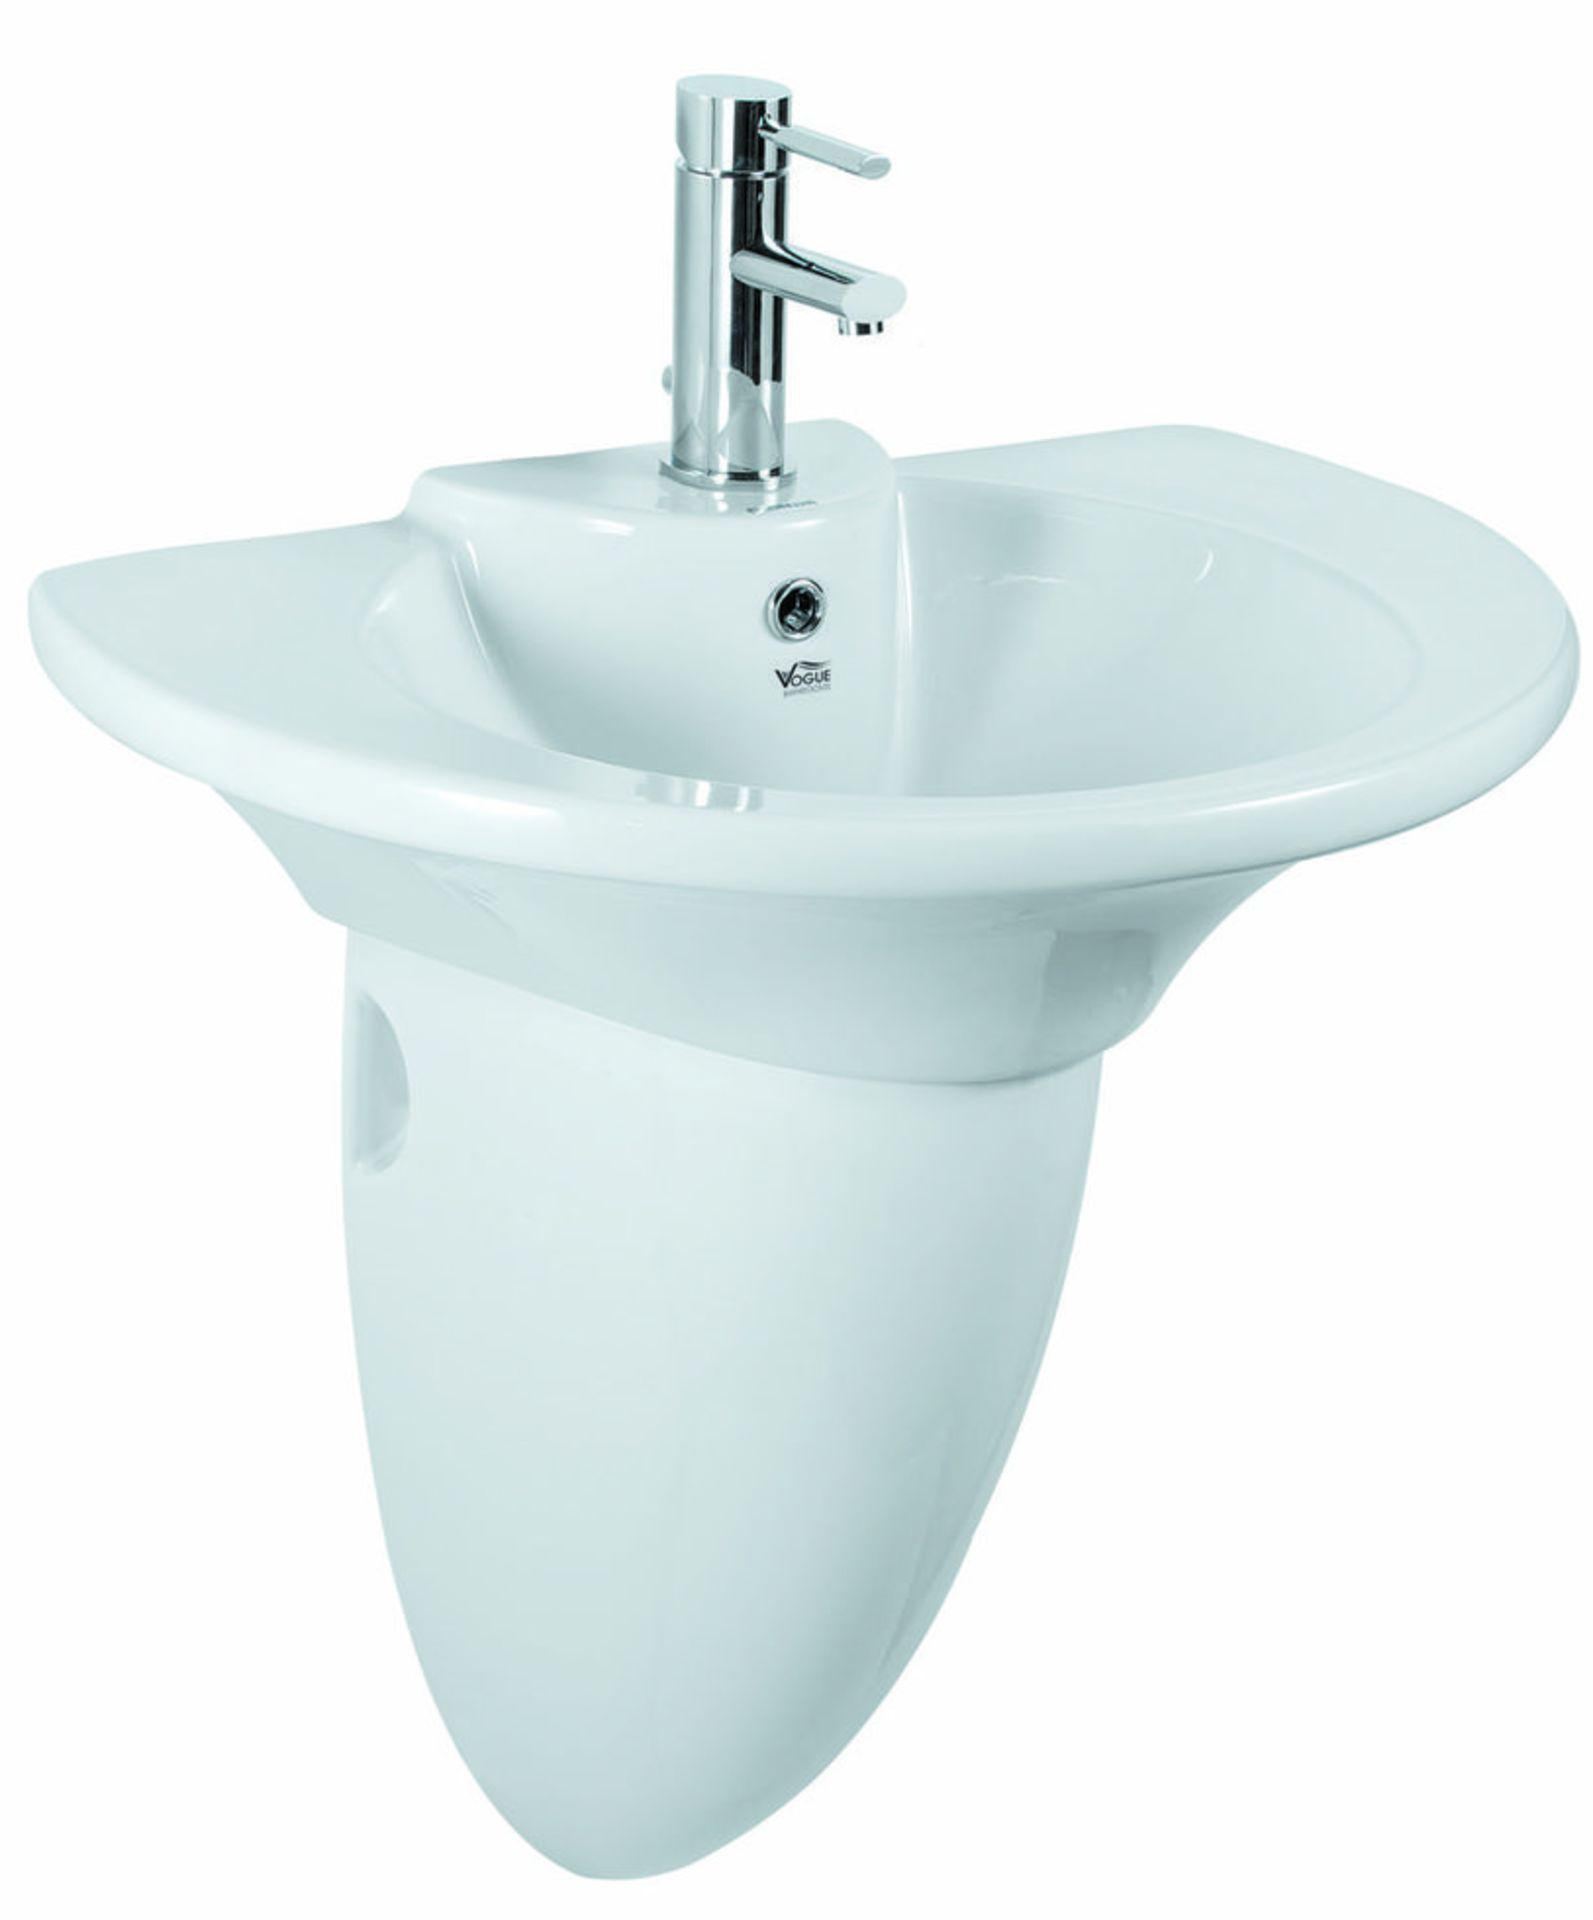 1 x Vogue Tarifa 1th 630mm Wall Hung Bathroom Sink Basin with Semi Pedestal - Brand New and